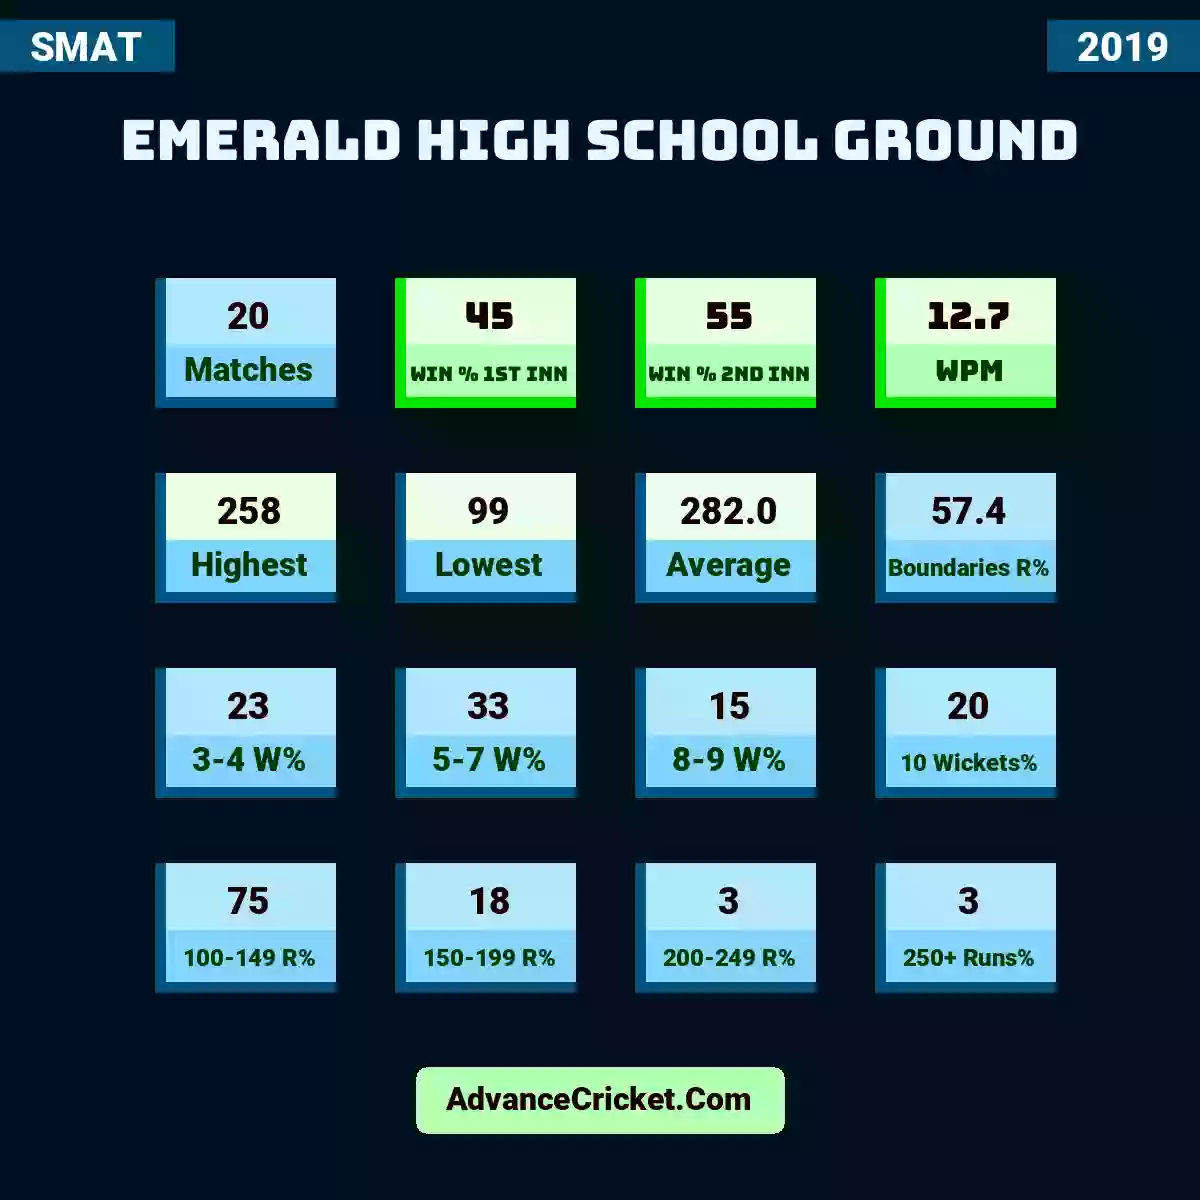 Image showing Emerald High School Ground with Matches: 20, Win % 1st Inn: 45, Win % 2nd Inn: 55, WPM: 12.7, Highest: 258, Lowest: 99, Average: 282.0, Boundaries R%: 57.4, 3-4 W%: 23, 5-7 W%: 33, 8-9 W%: 15, 10 Wickets%: 20, 100-149 R%: 75, 150-199 R%: 18, 200-249 R%: 3, 250+ Runs%: 3.